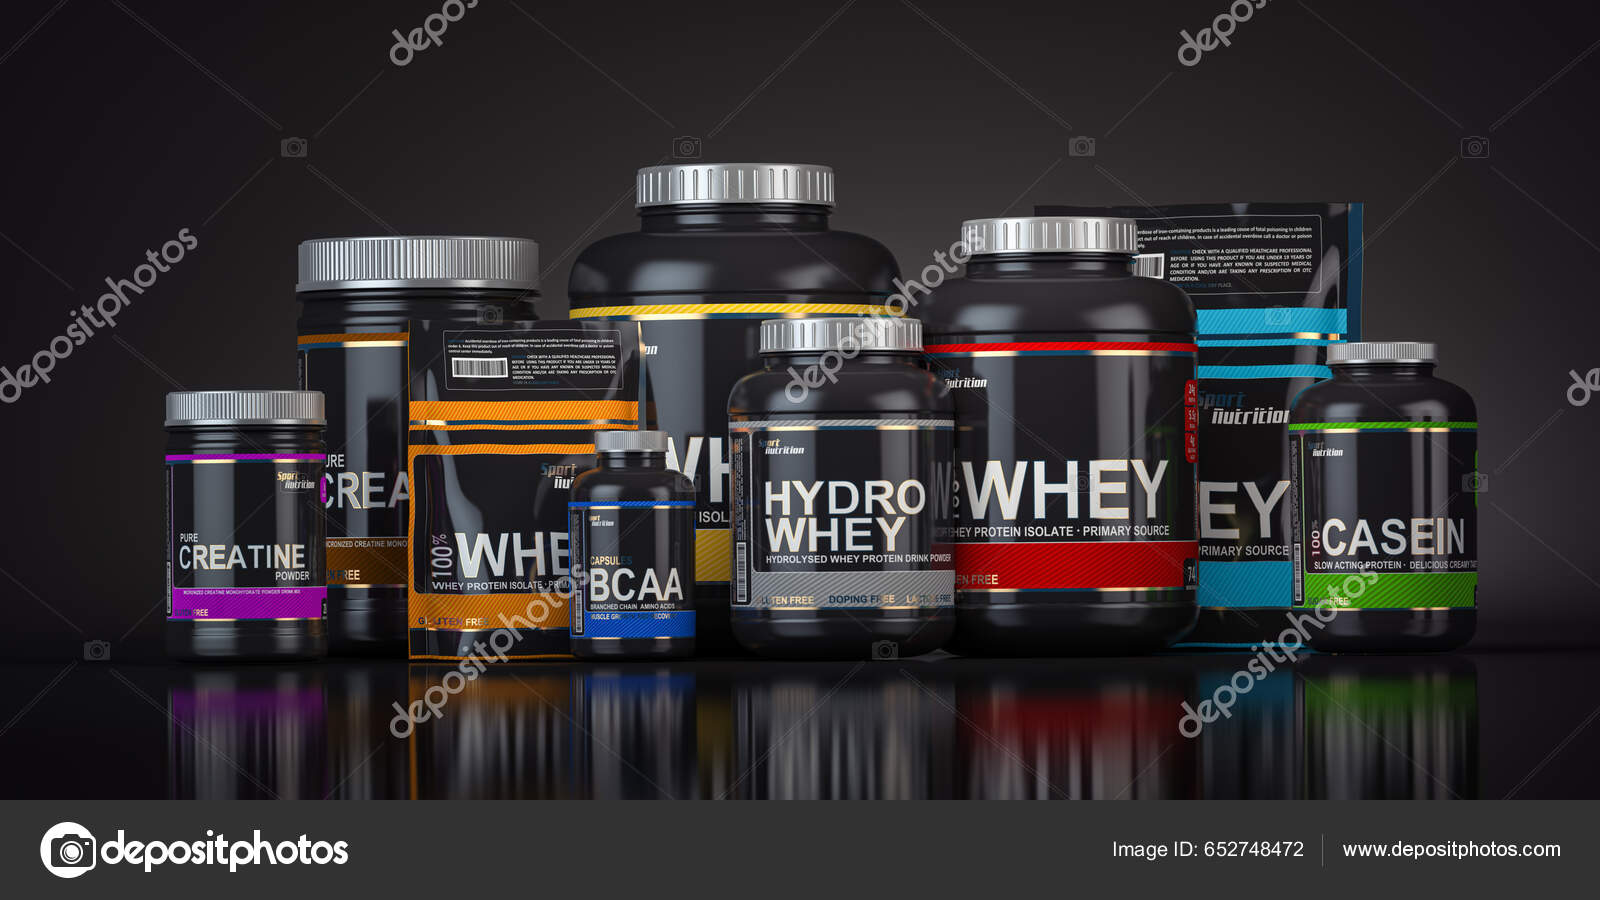 https://st5.depositphotos.com/1001877/65274/i/1600/depositphotos_652748472-stock-photo-sports-nutrition-supplements-bodybuilding-whey.jpg